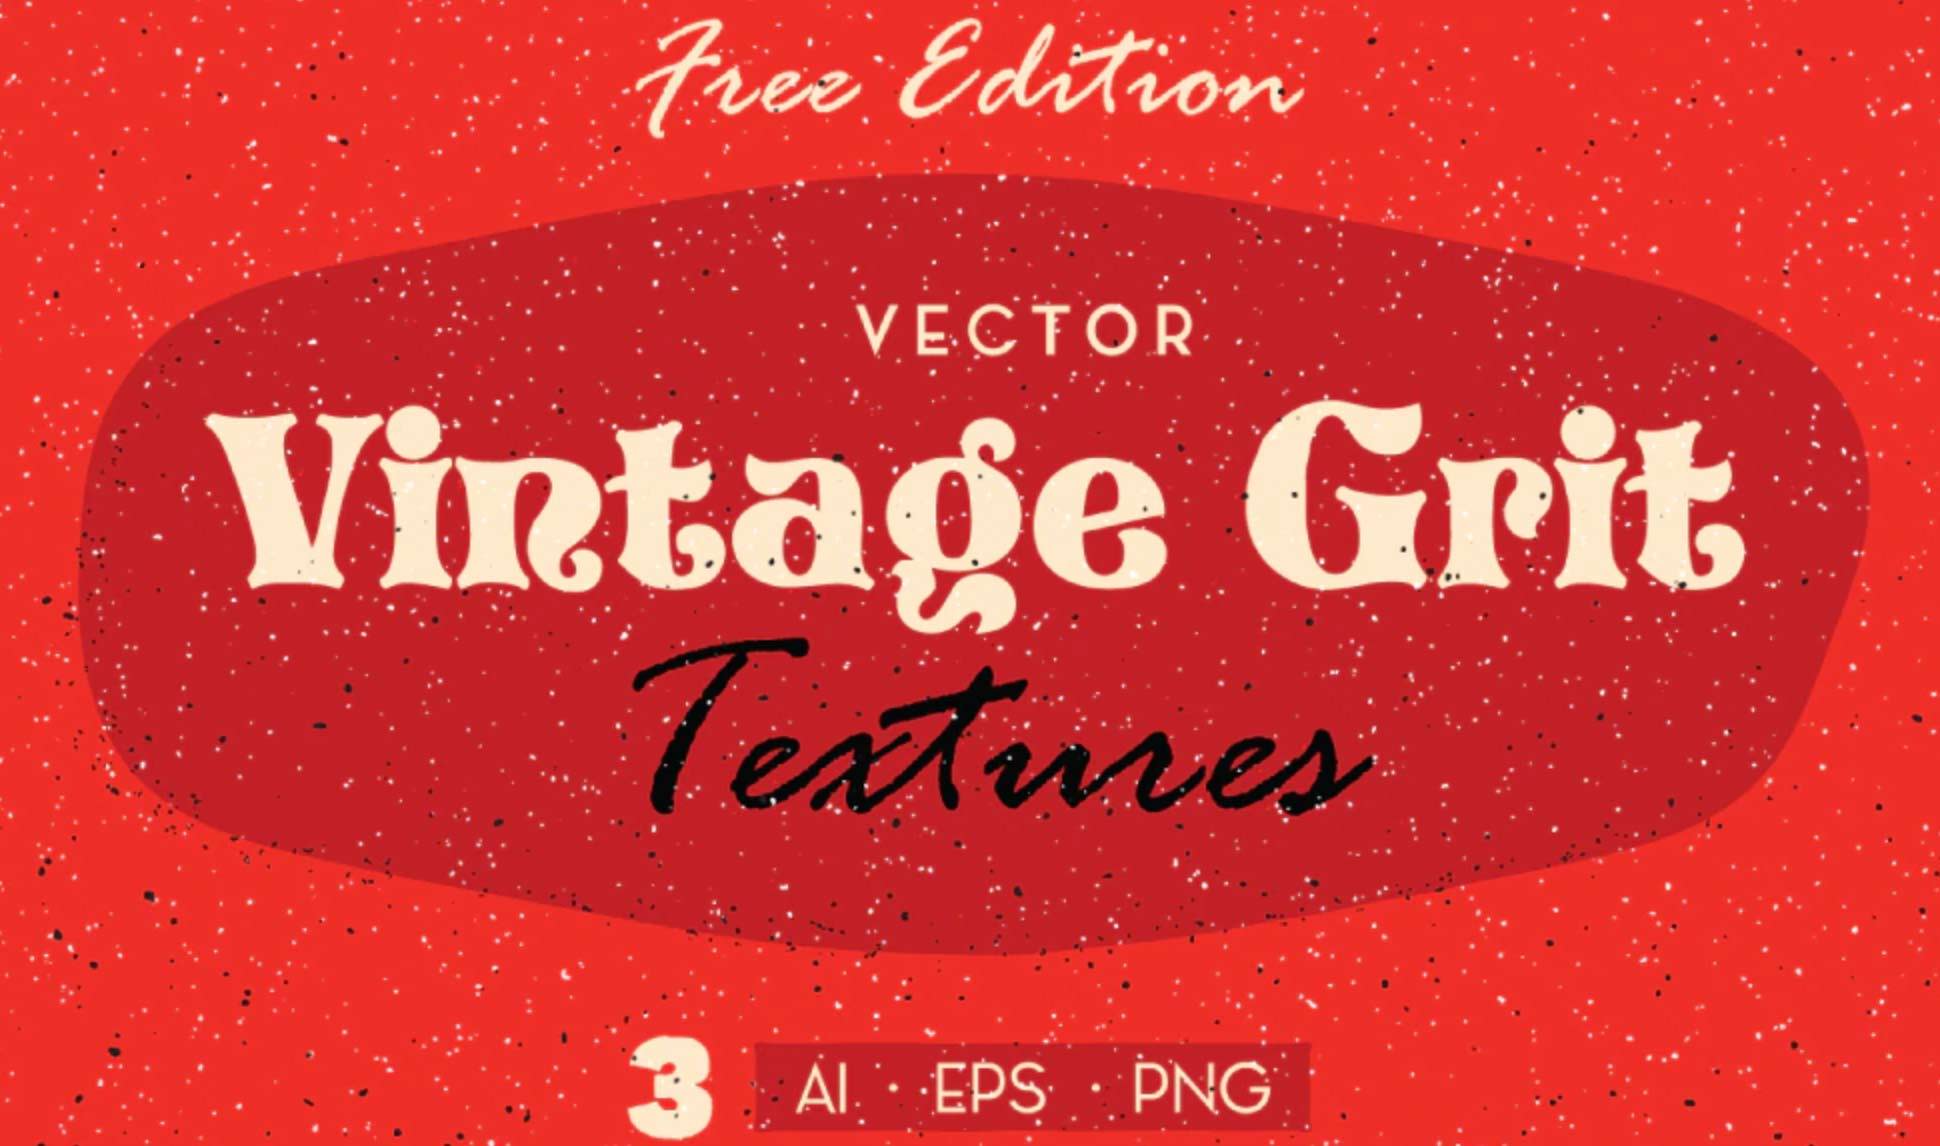 Free vintage grit vector textures